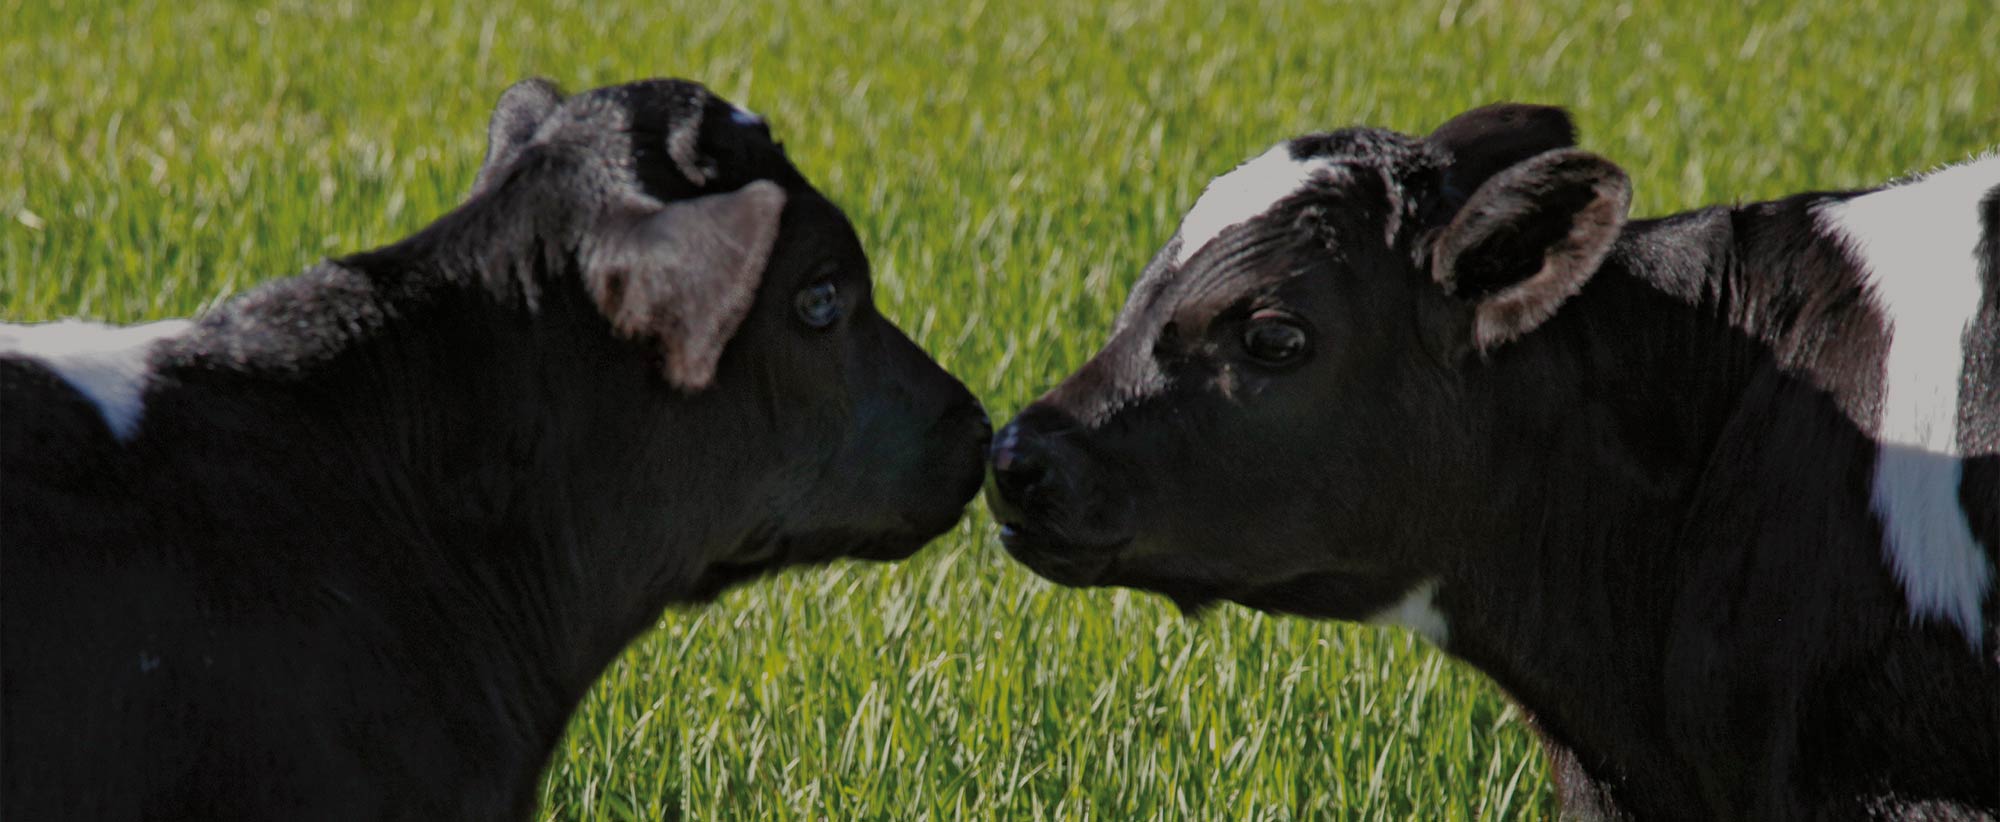 The Farmer's Cow Calves